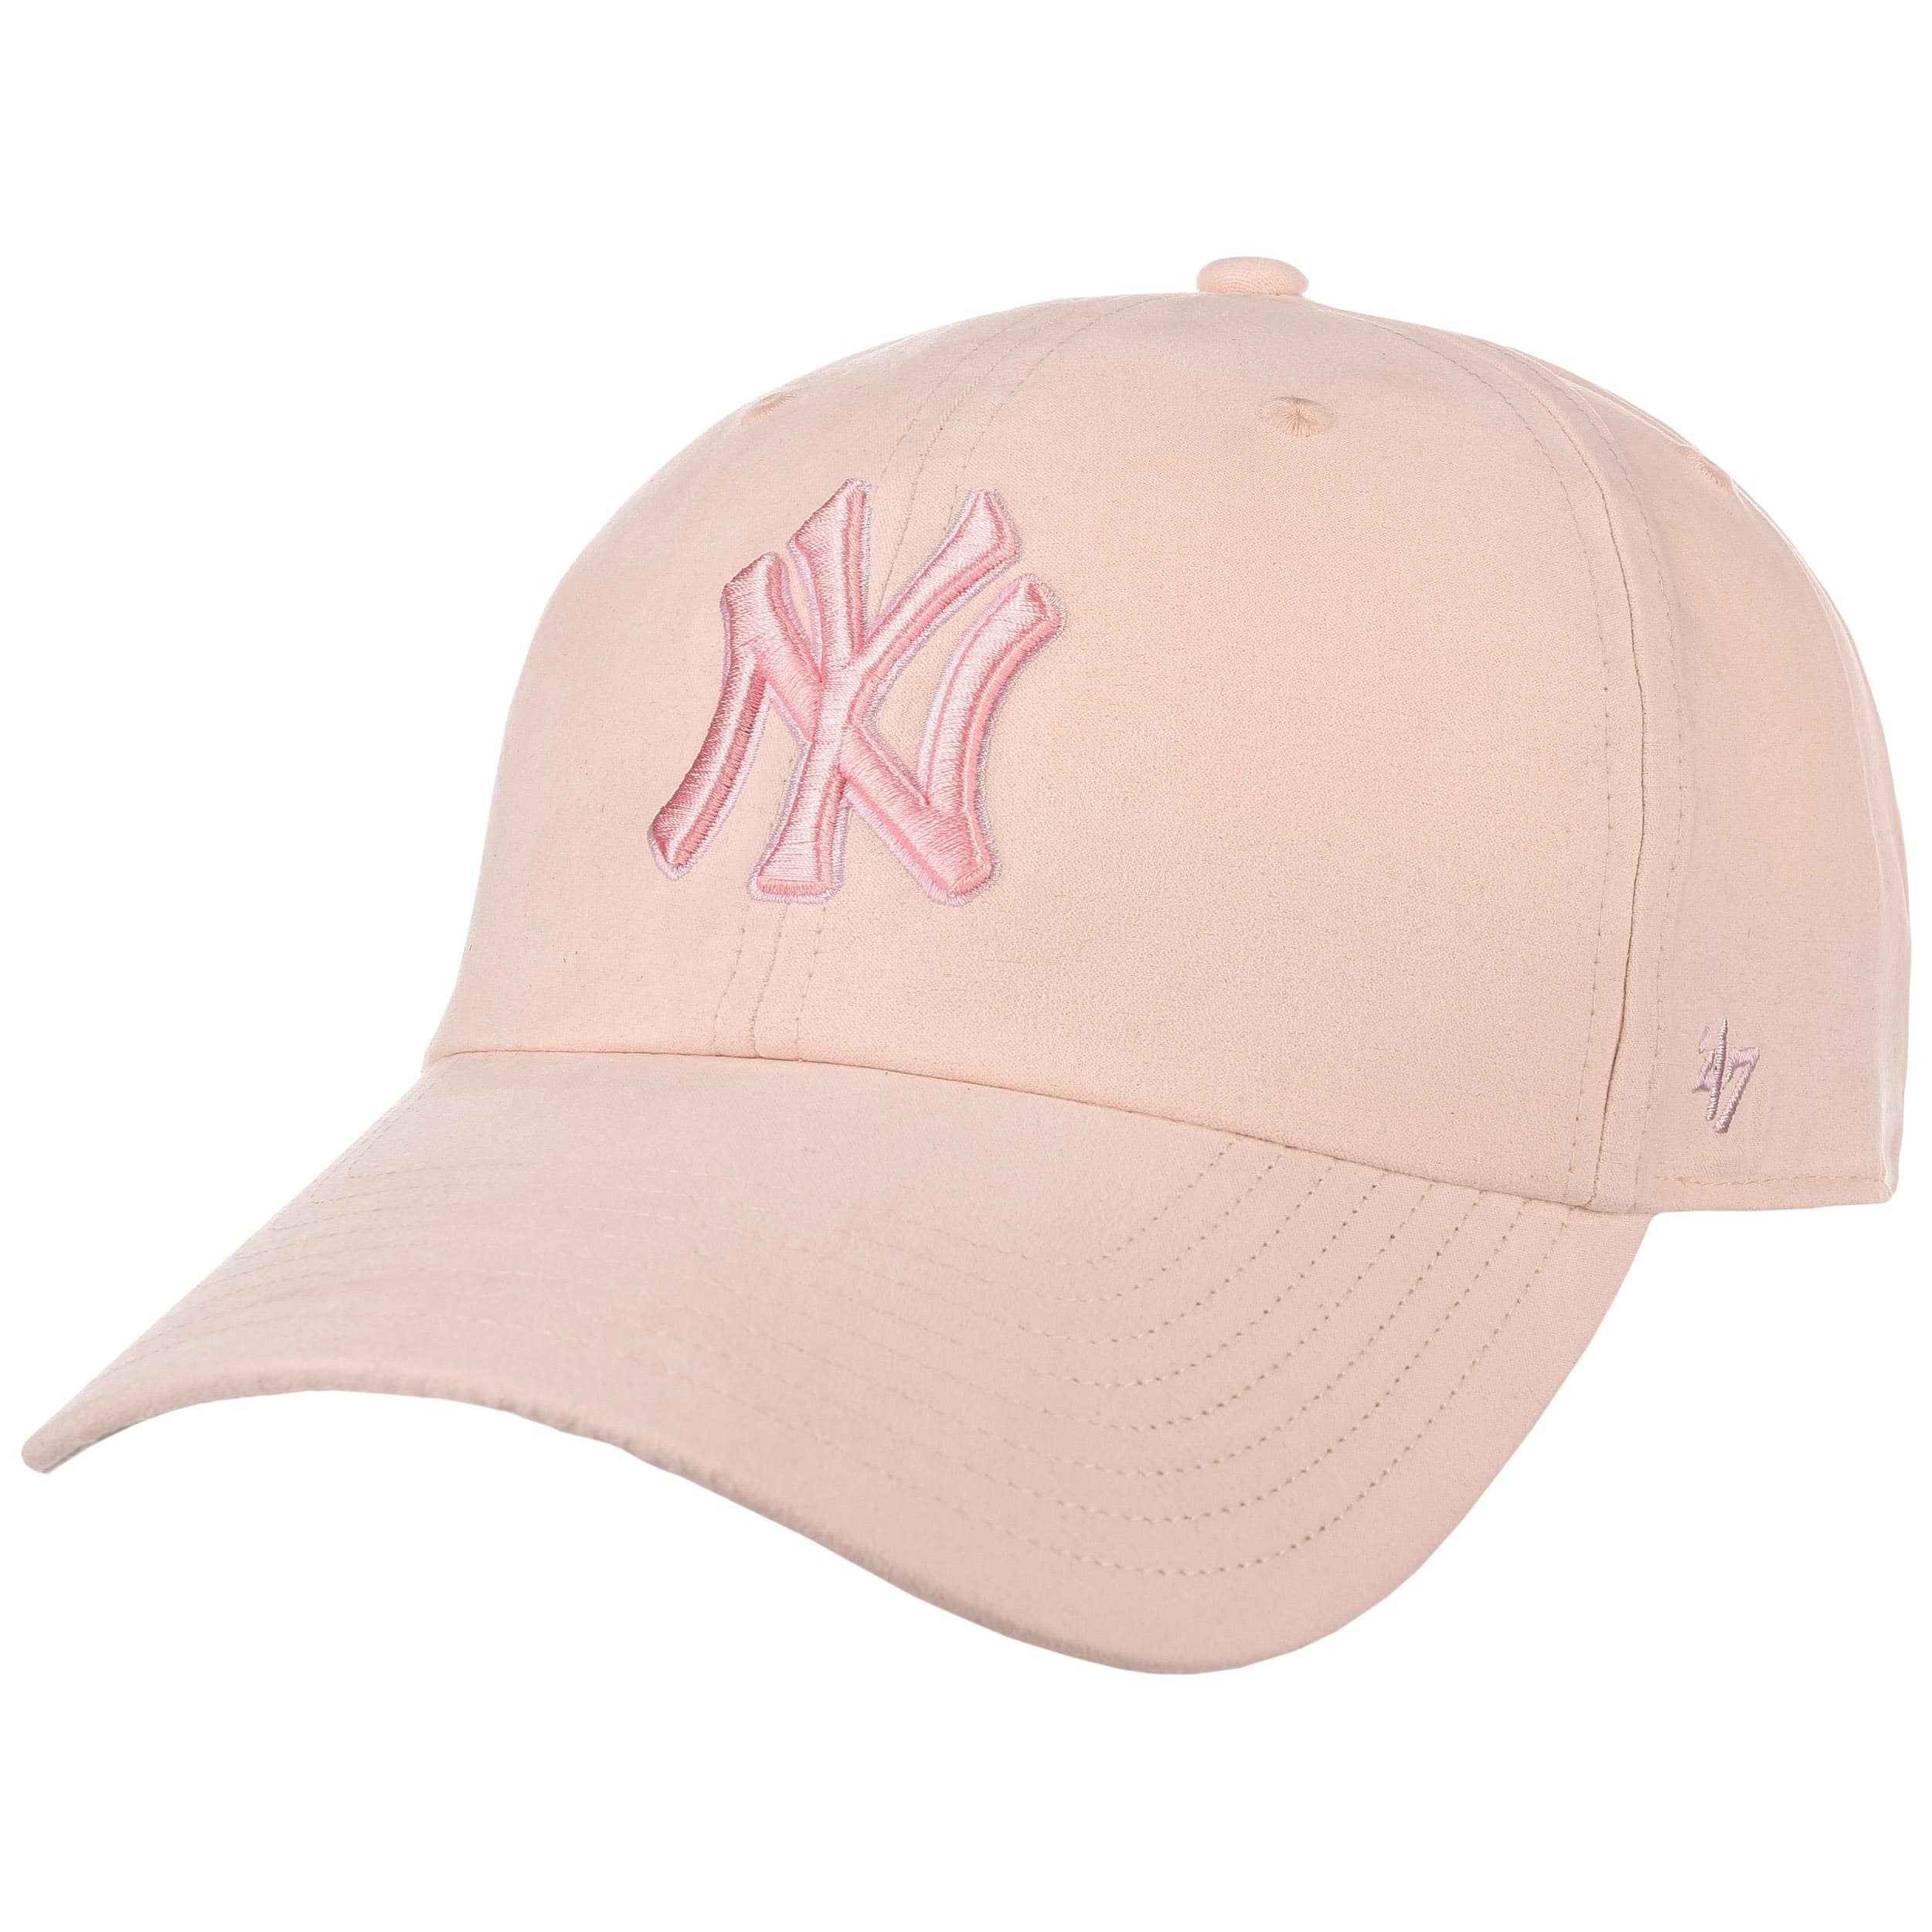 MVP Ultrabasic Yankees Cap by 47 Brand - 17,95 €